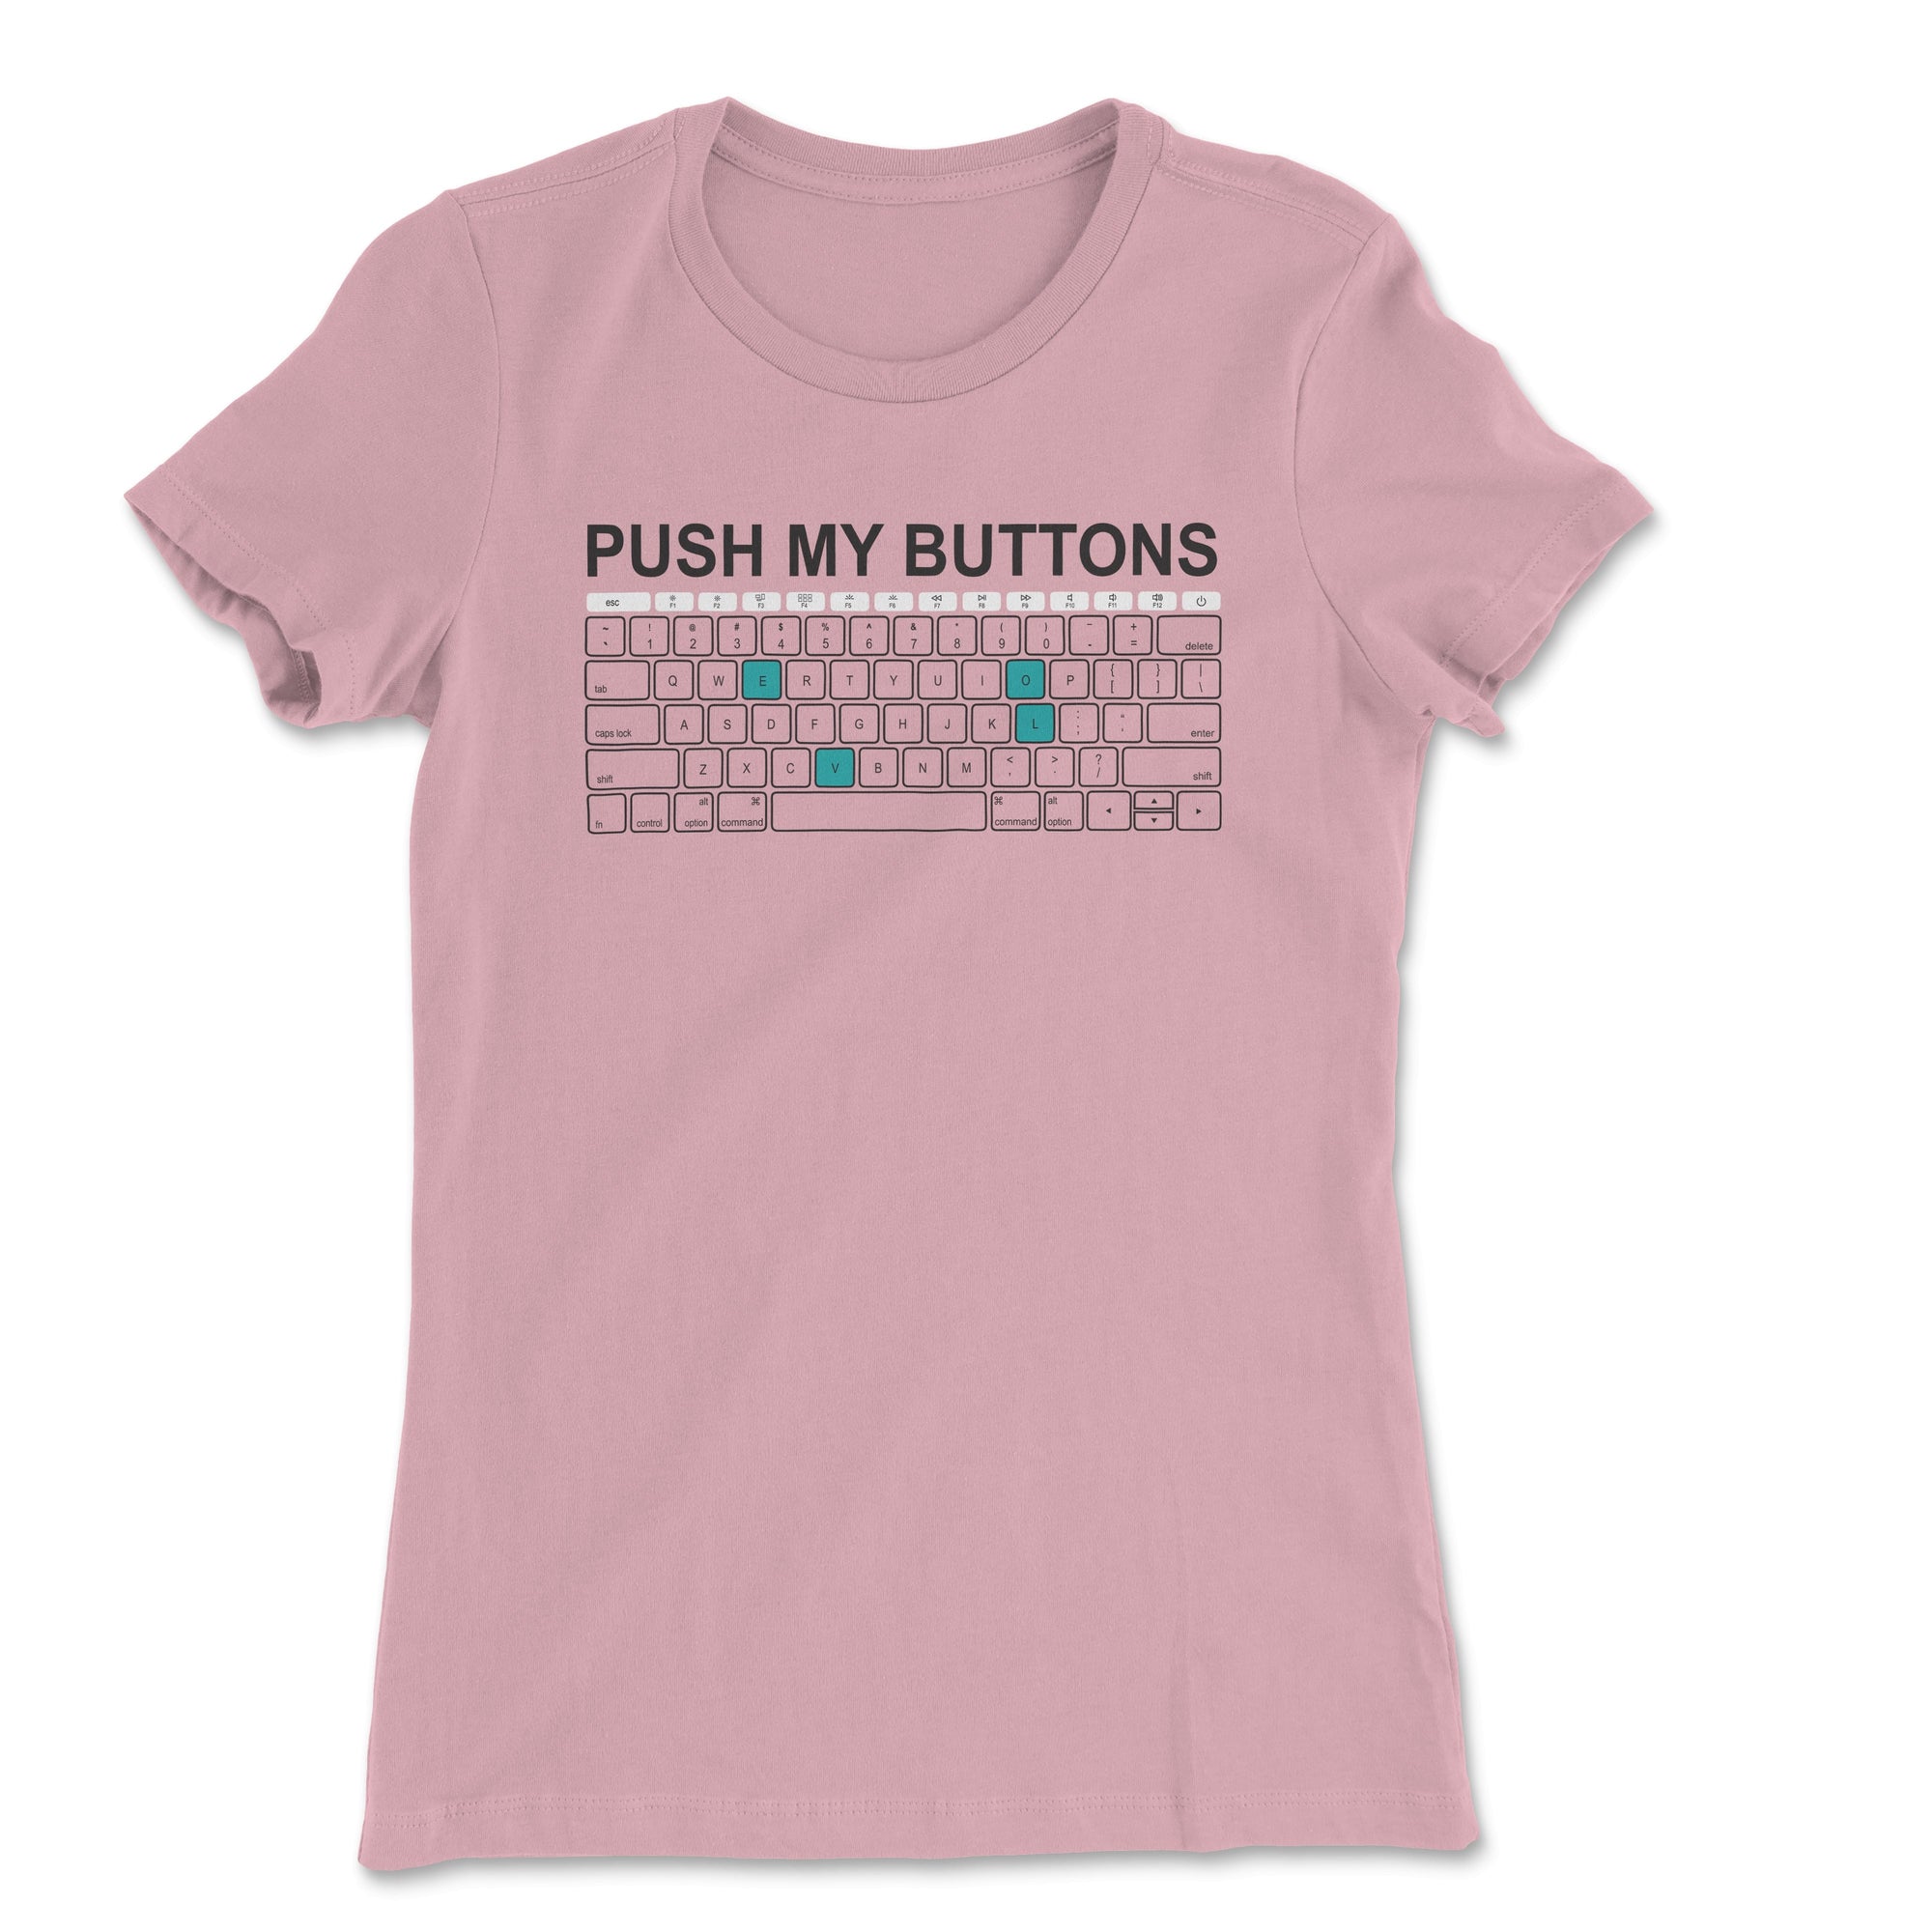 Push My Buttons Women's T-Shirt - anishphilip